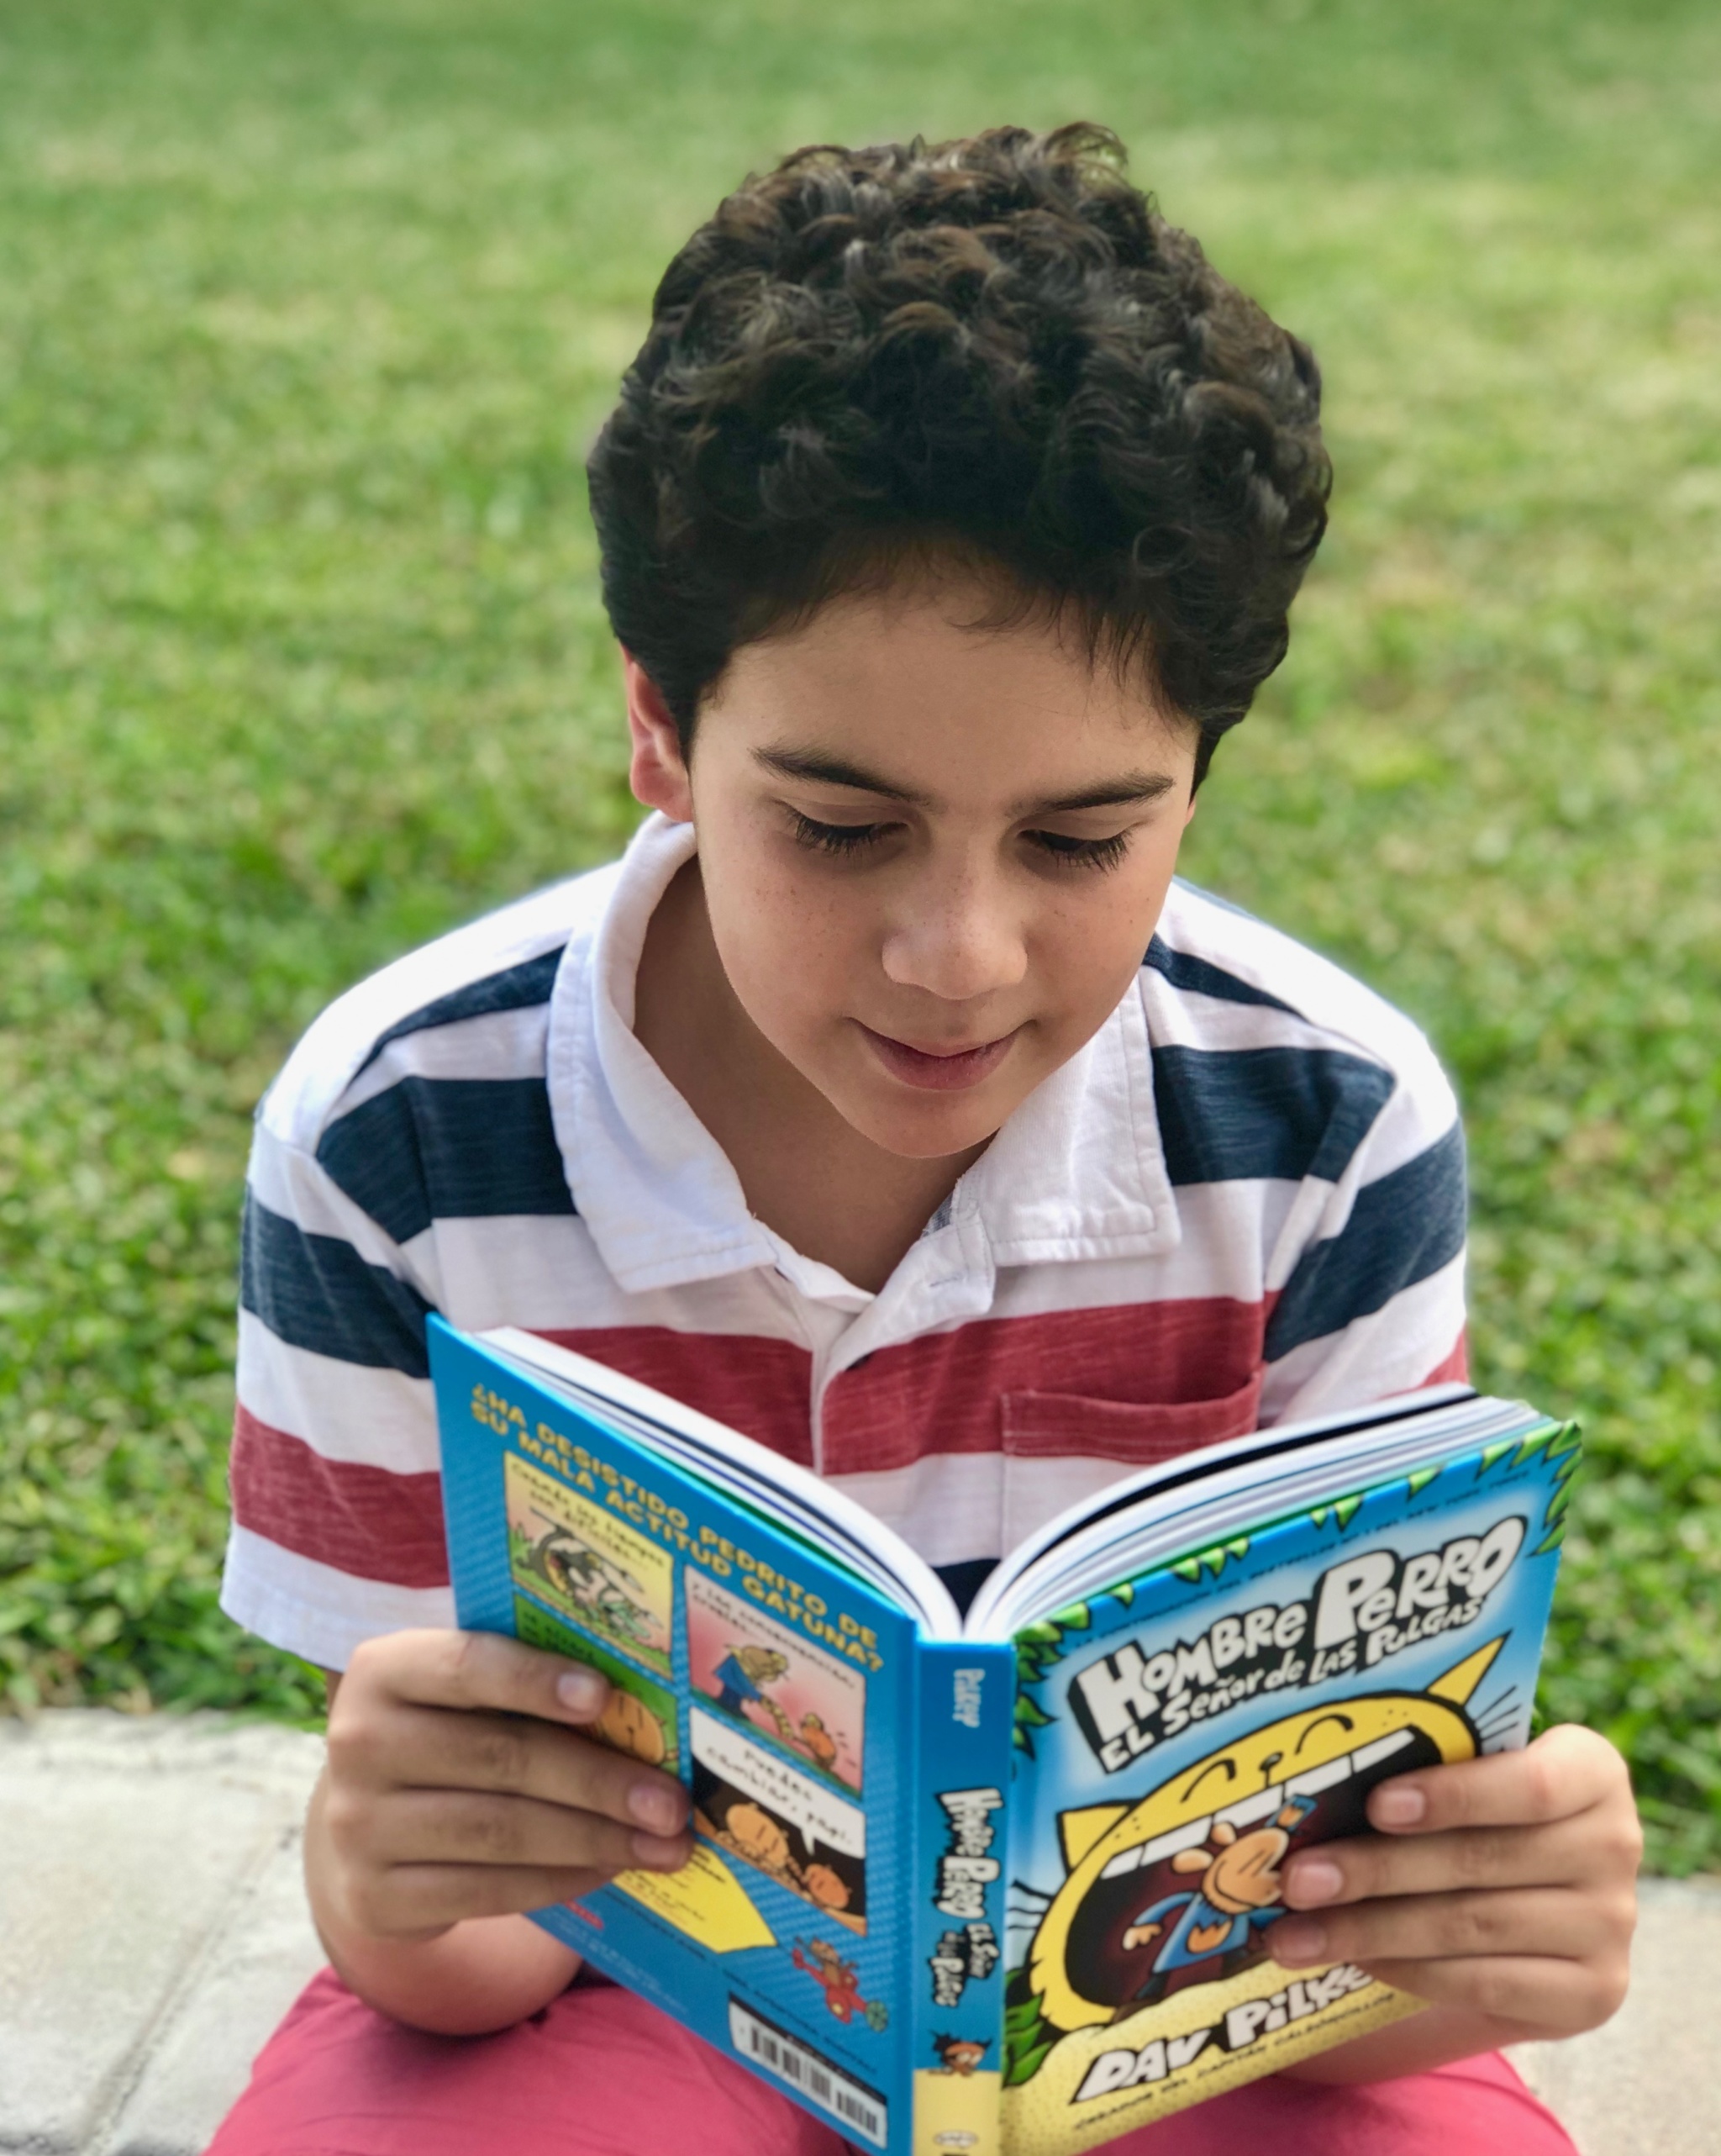 Hombre Perro books in Spanish for kids